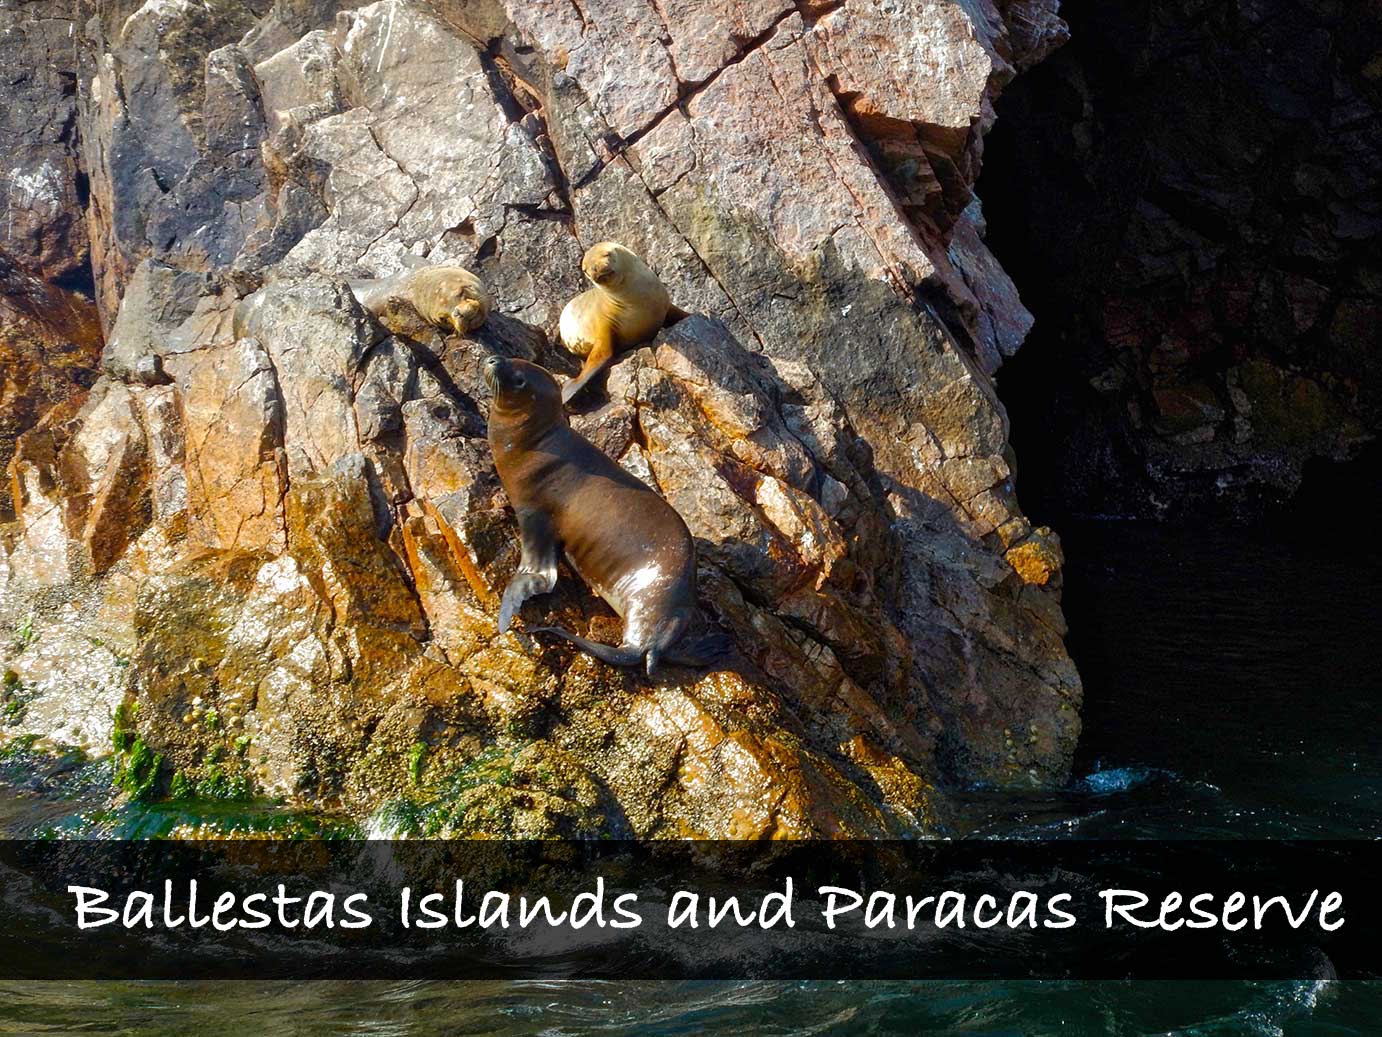 Touring Ballestas Islands and Paracas Reserve